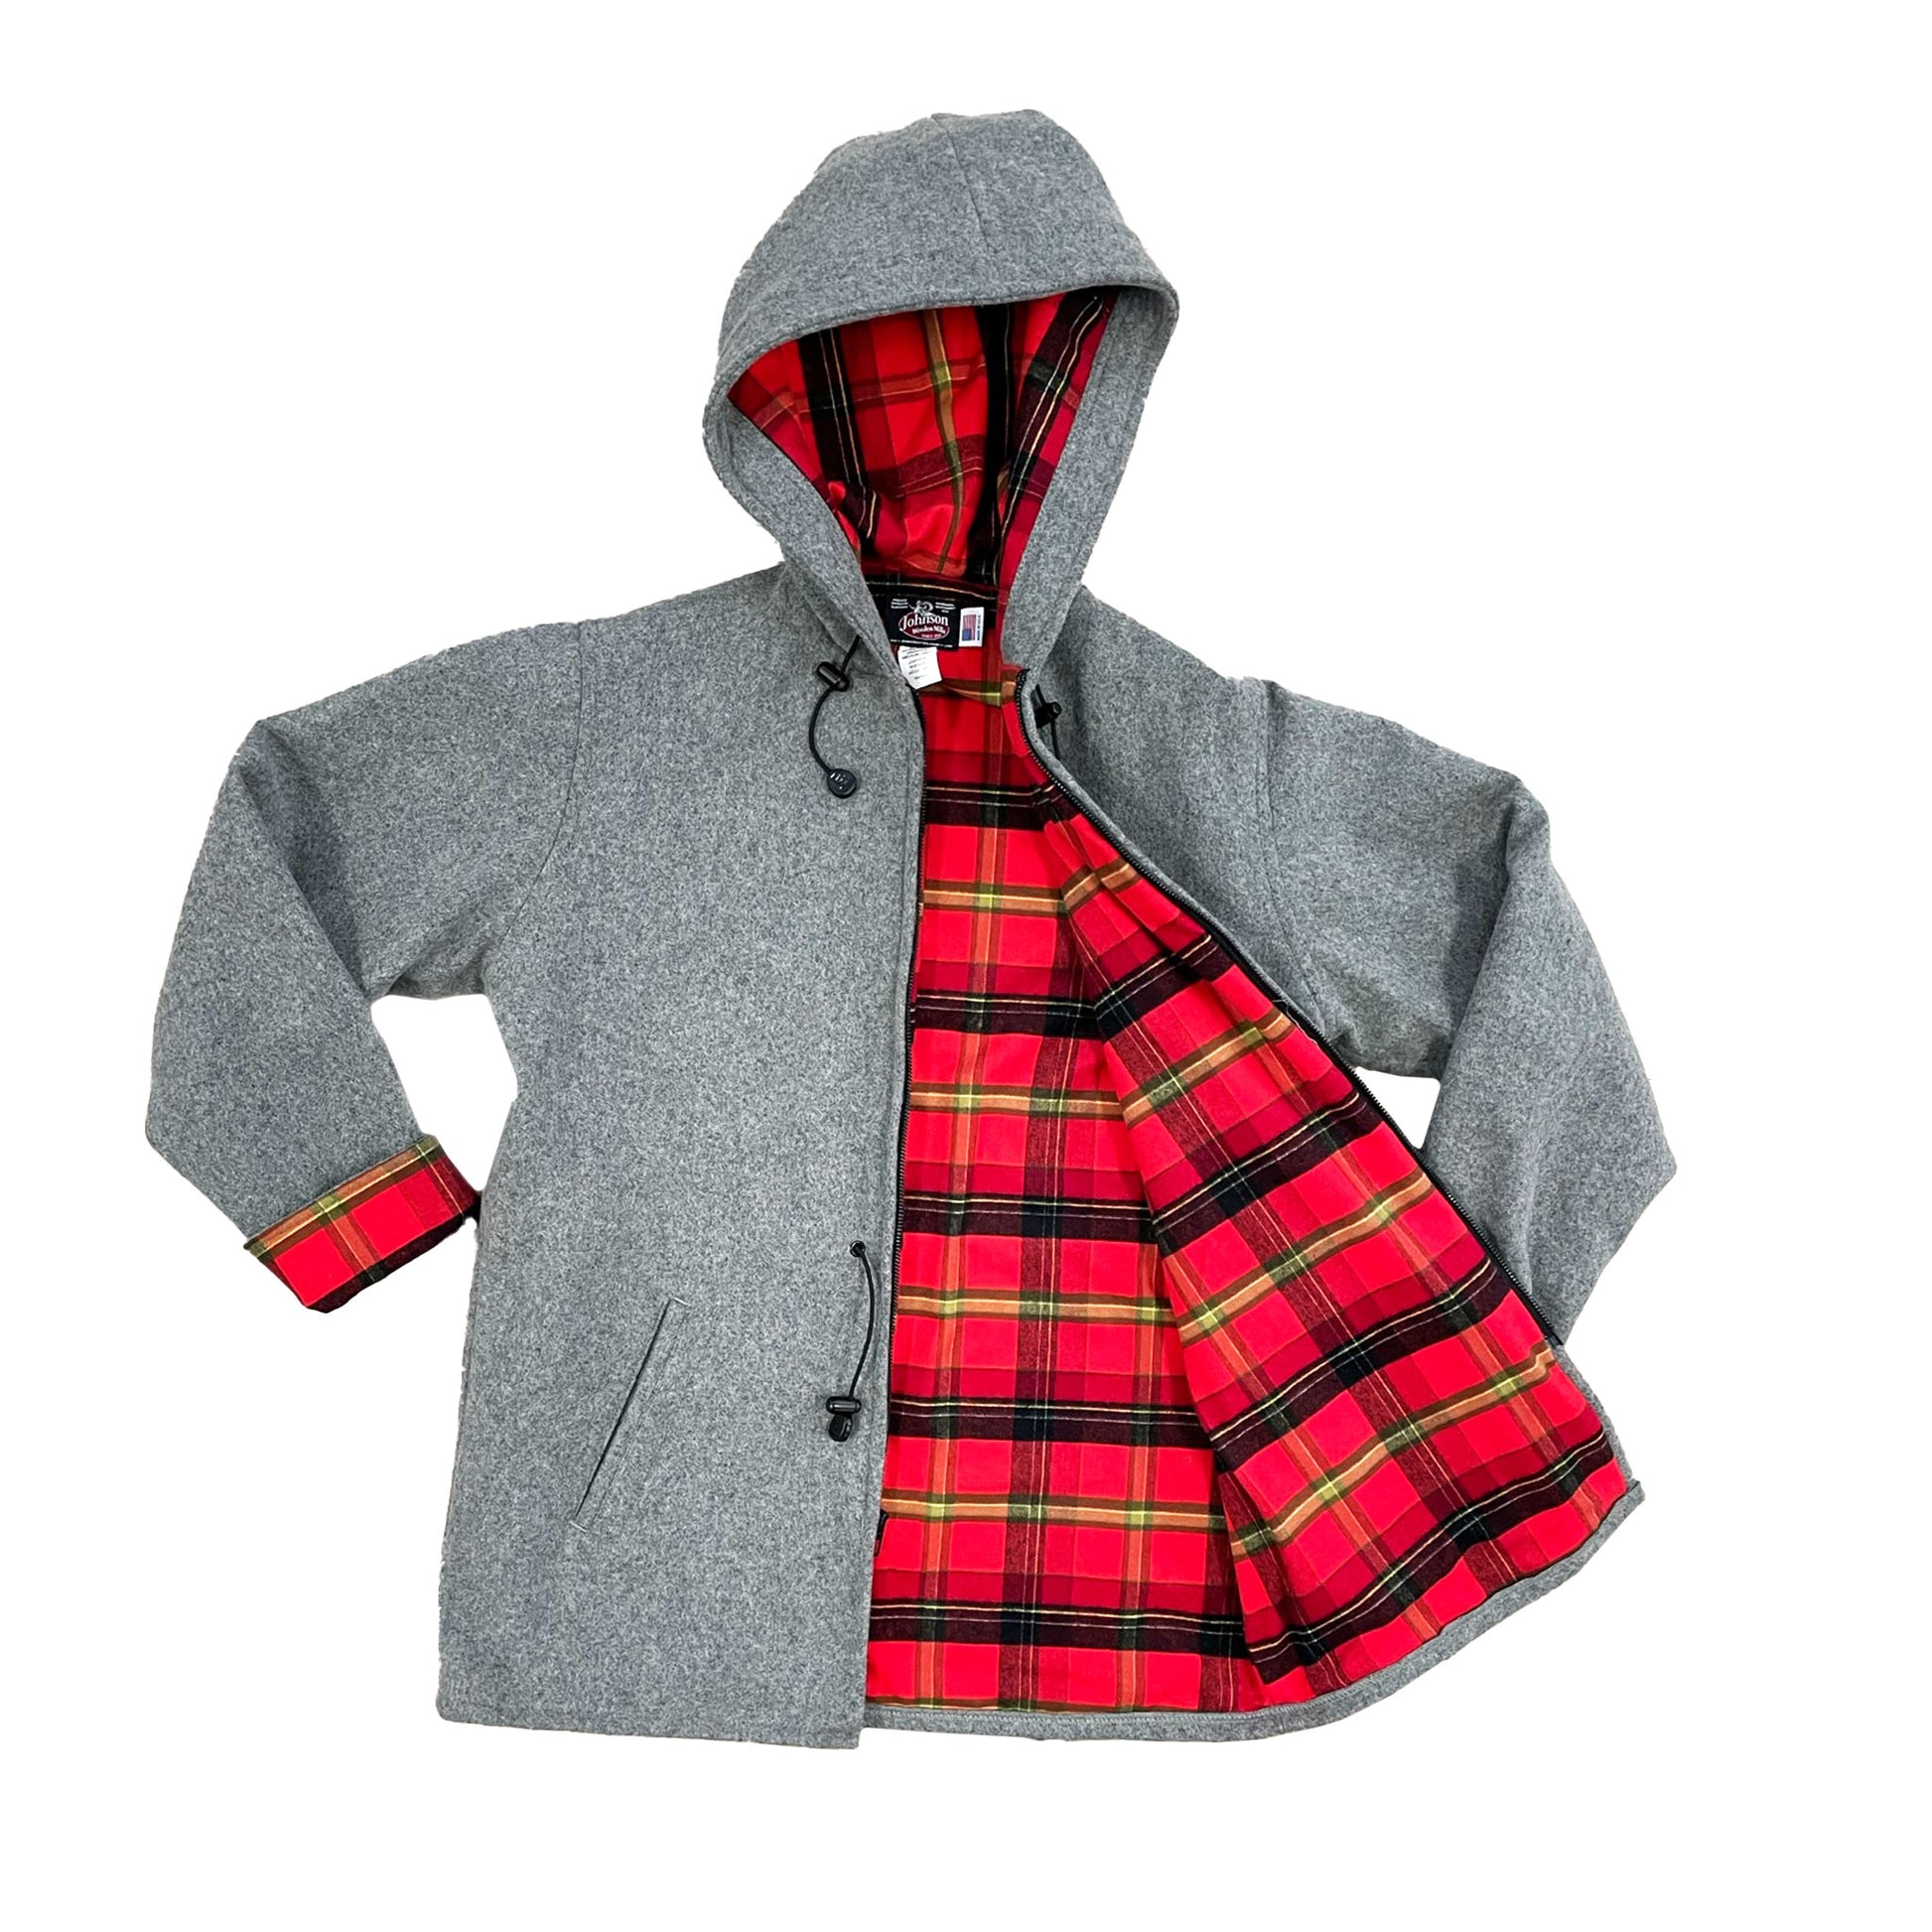 Johnson Woolen Mills Women's gray wool anorak jacket with red flannel lining